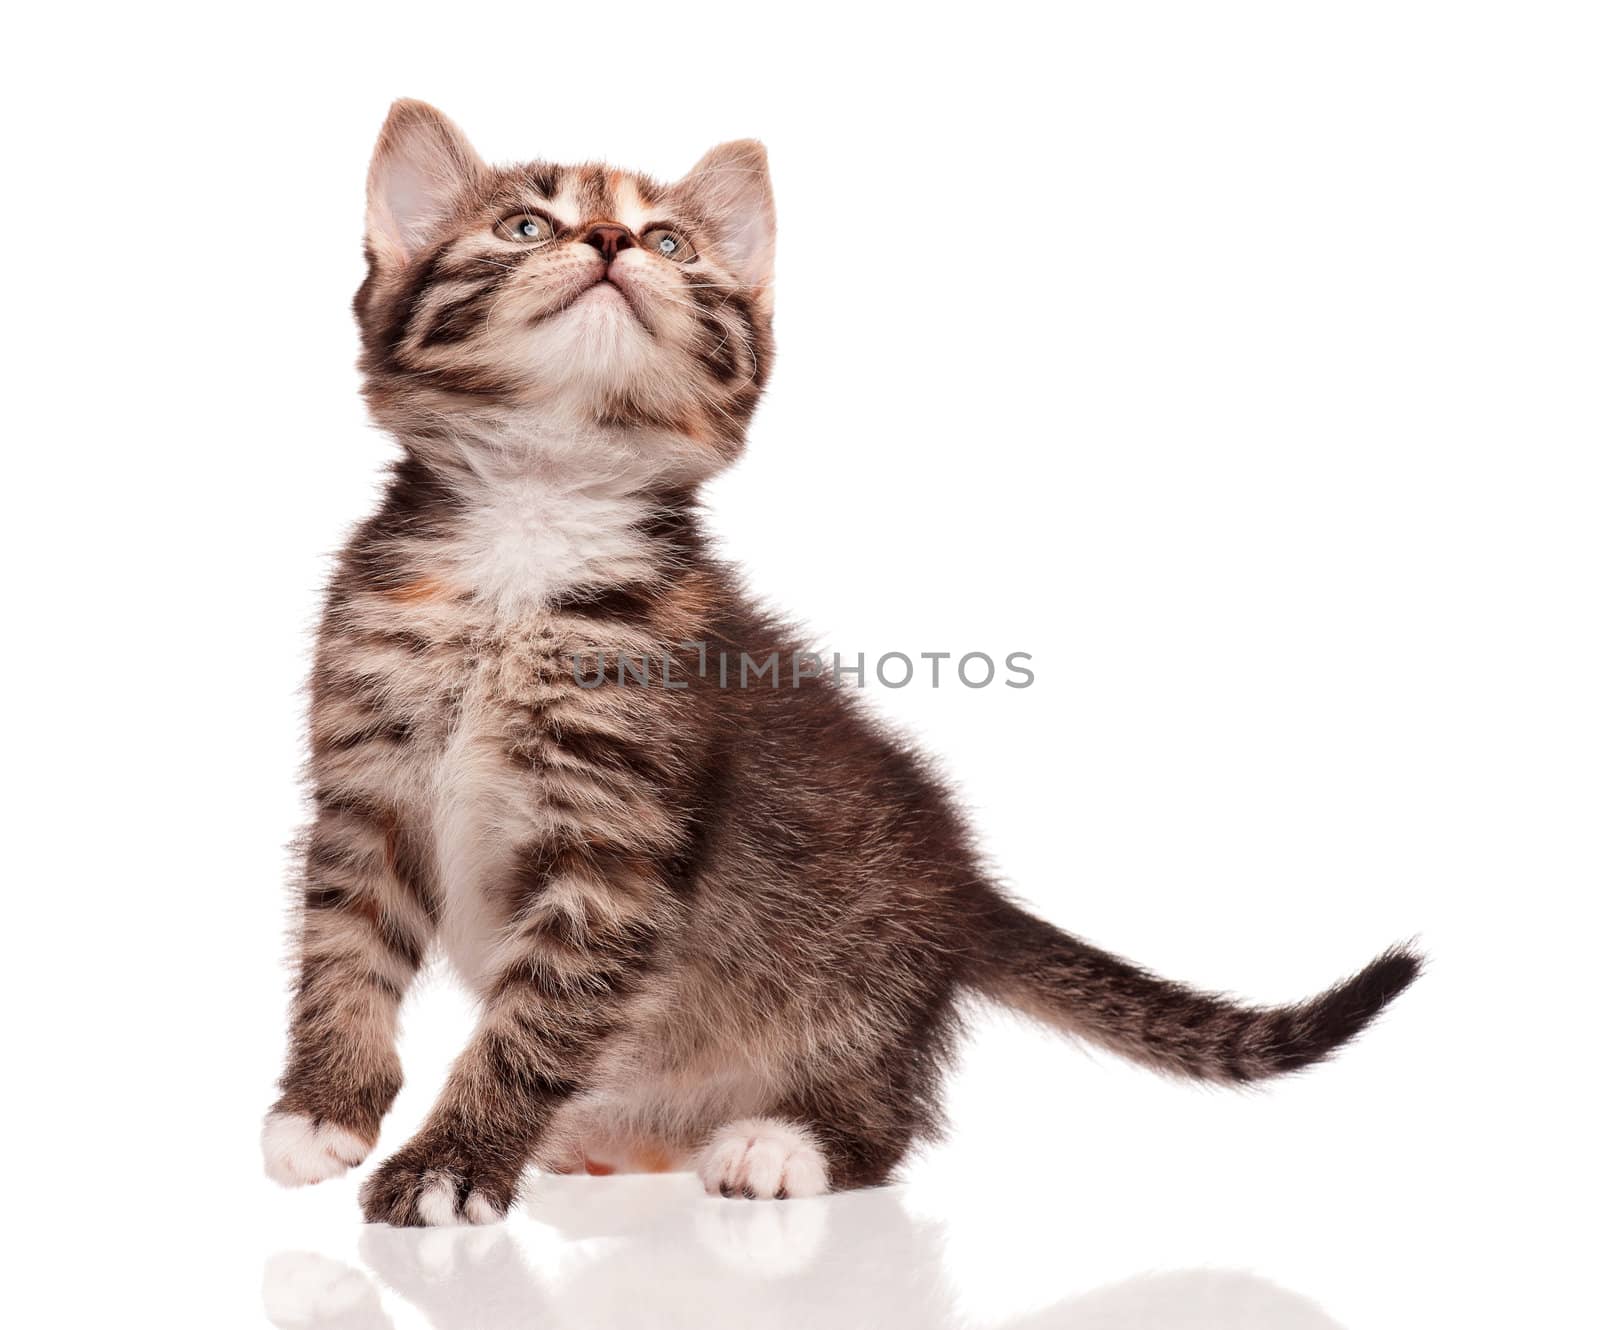 Cute little kitten isolated on white background